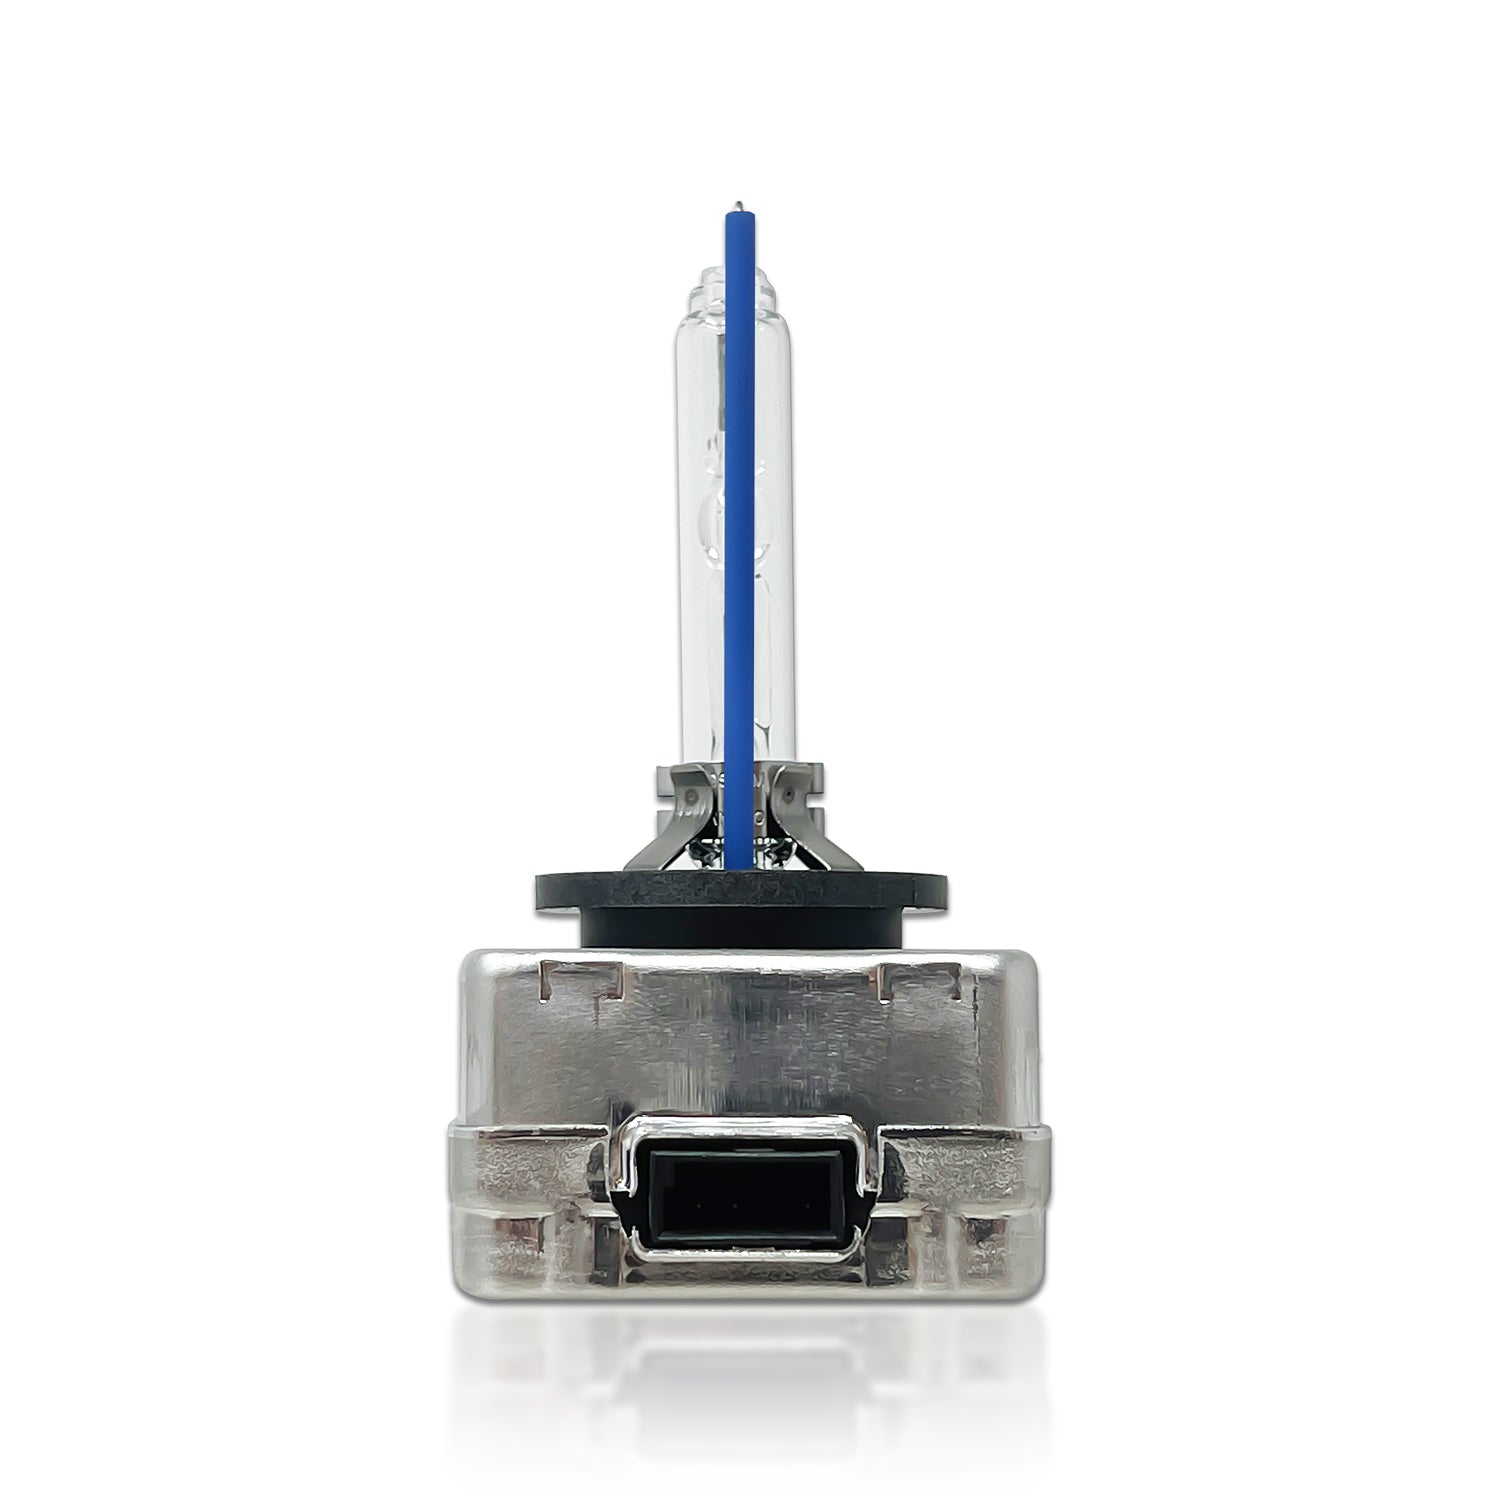 OSRAM Cool Blue Advance - HID/Xenon Replacement Bulbs